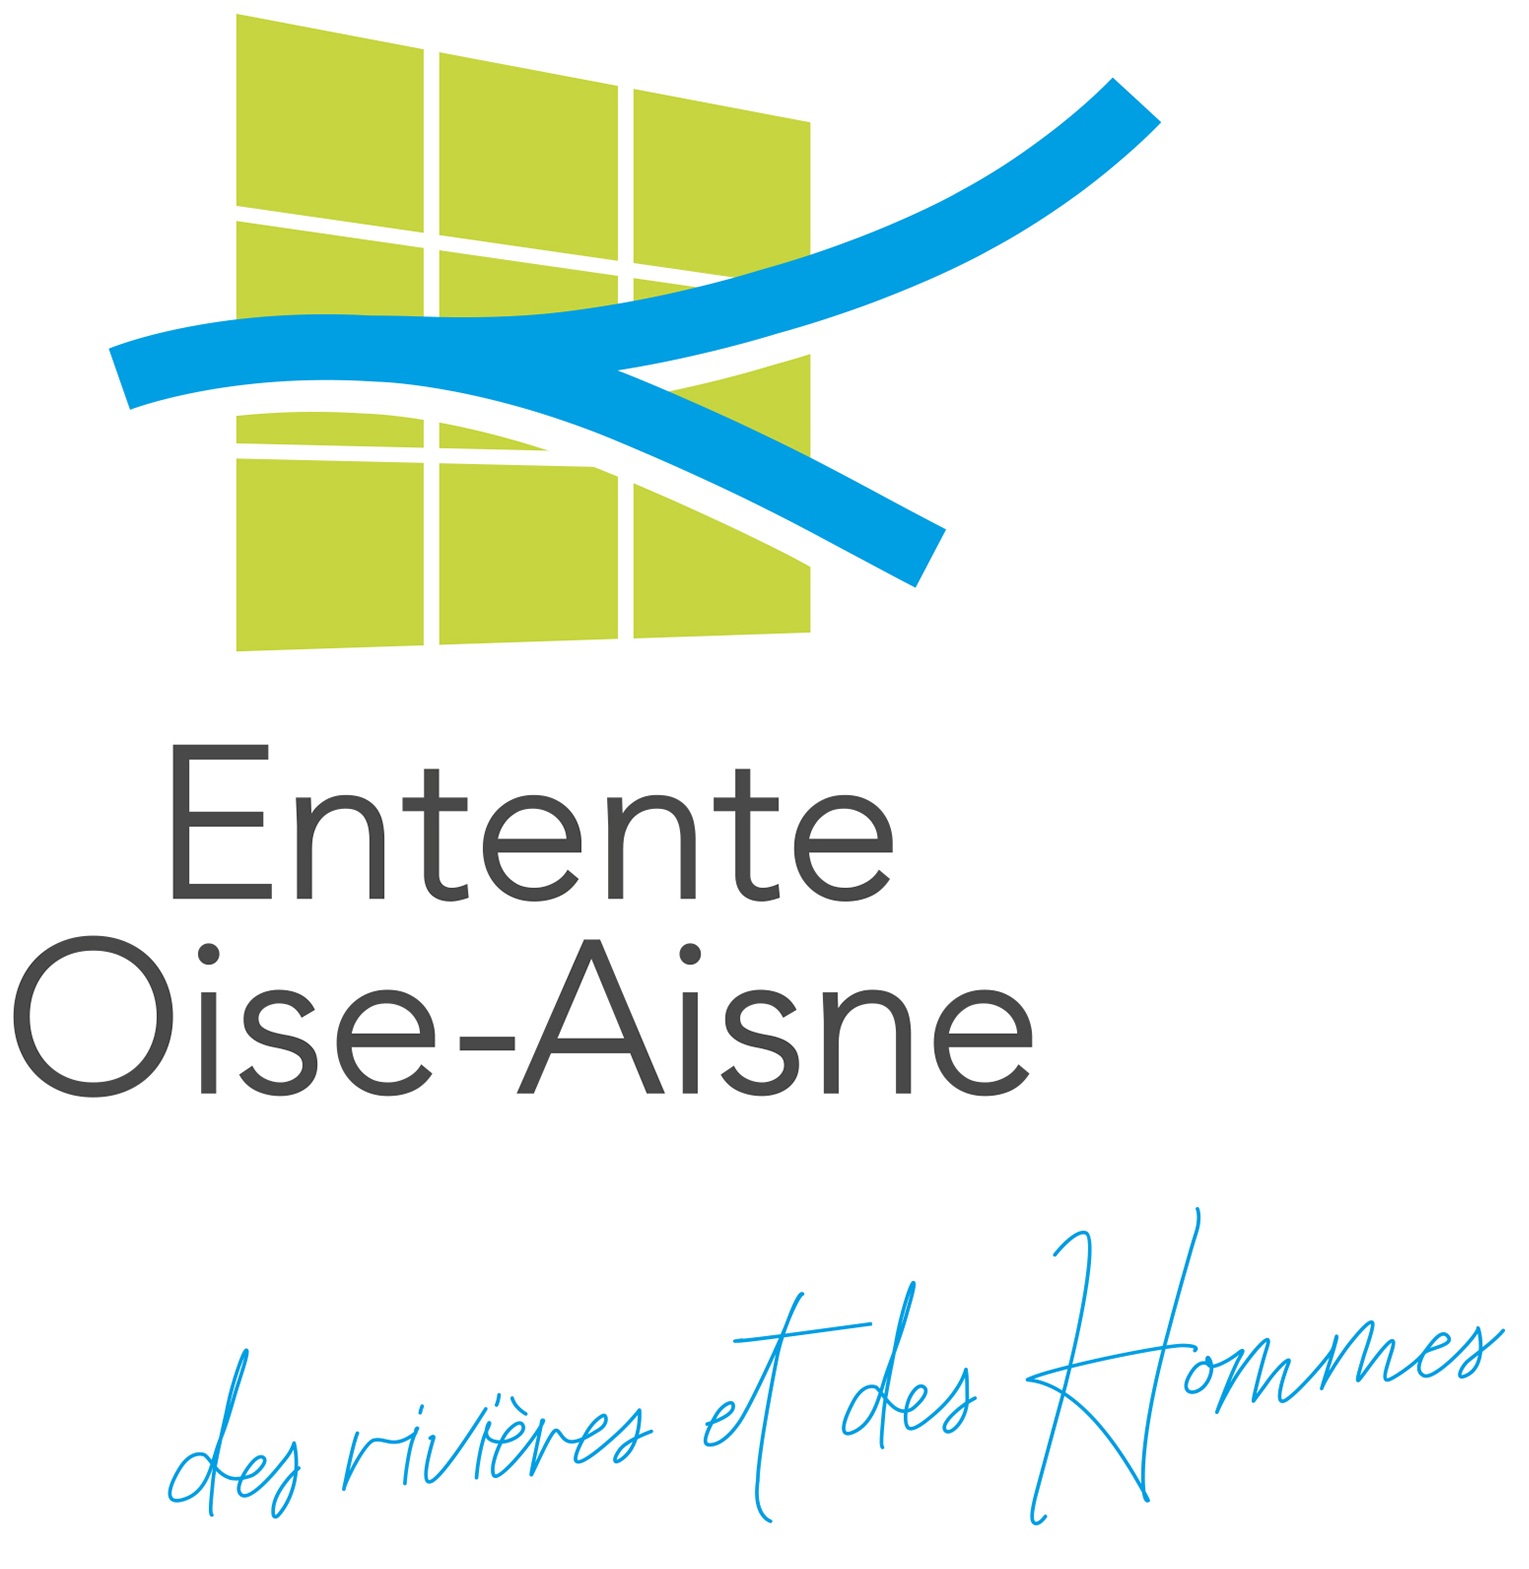 Le logo de Entente Oise-Aisne